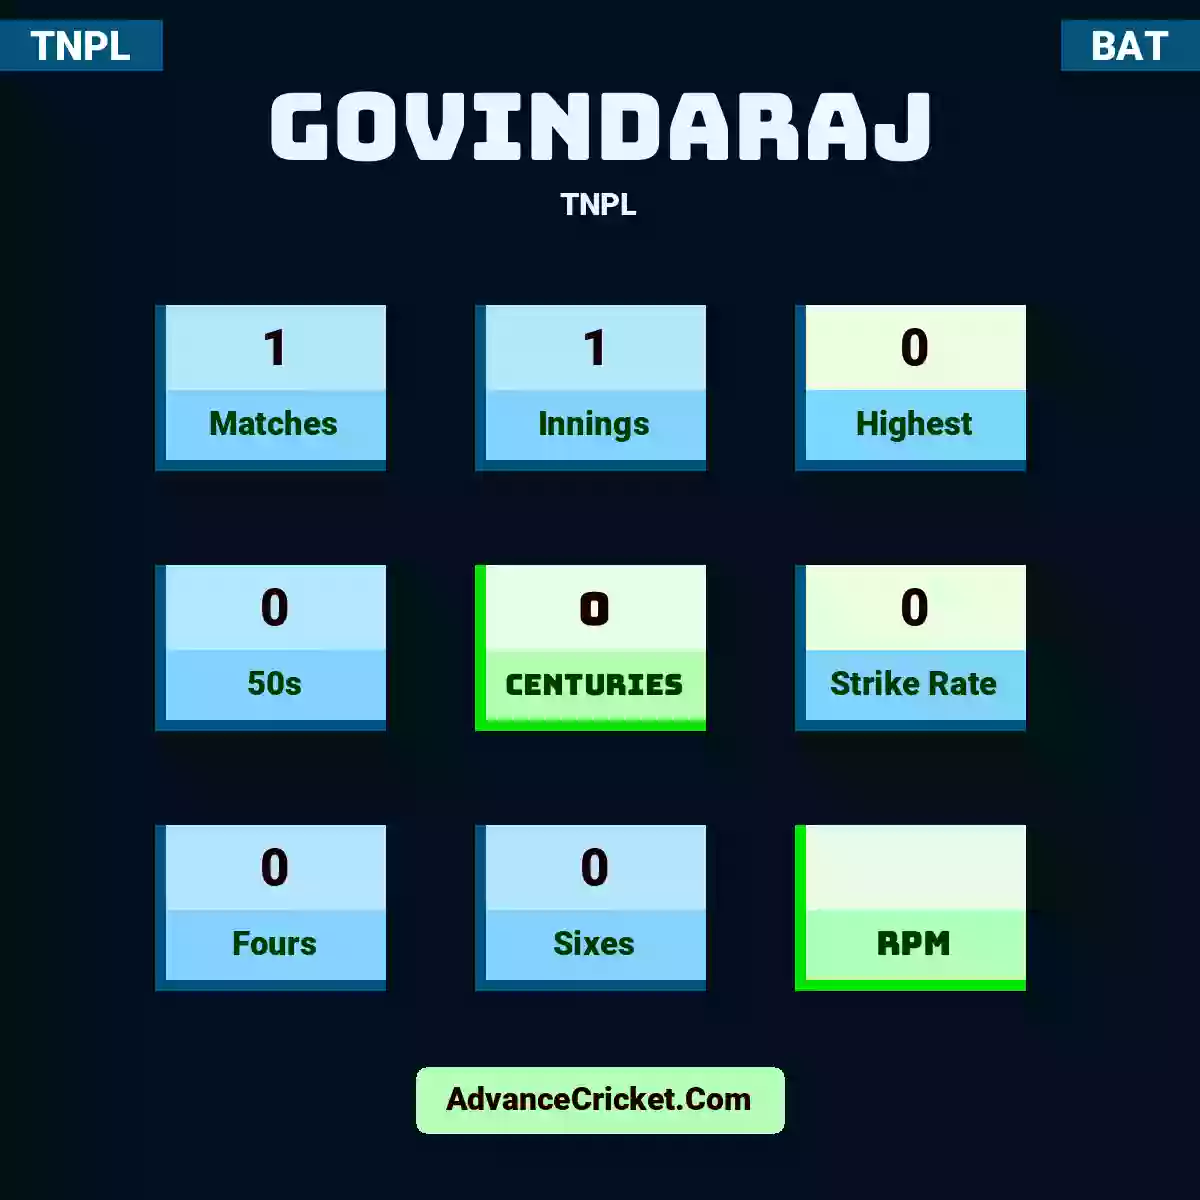 Govindaraj TNPL , Govindaraj played 1 matches, scored 0 runs as highest, 0 half-centuries, and 0 centuries, with a strike rate of 0. G.Govindaraj hit 0 fours and 0 sixes.